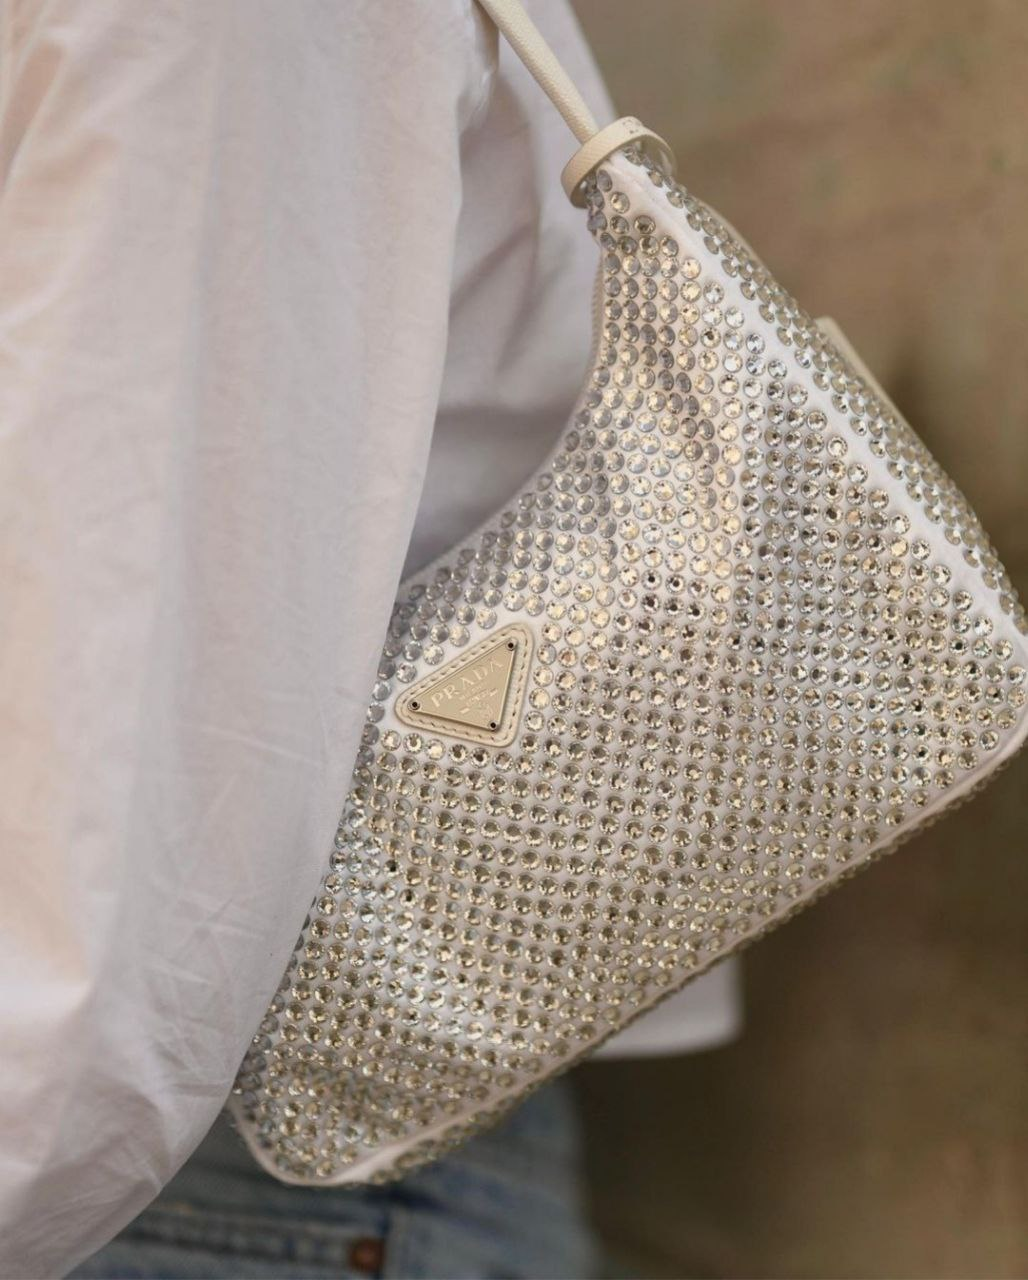 Look: Heart Evangelista's Favorite Designer Bags Of All Time